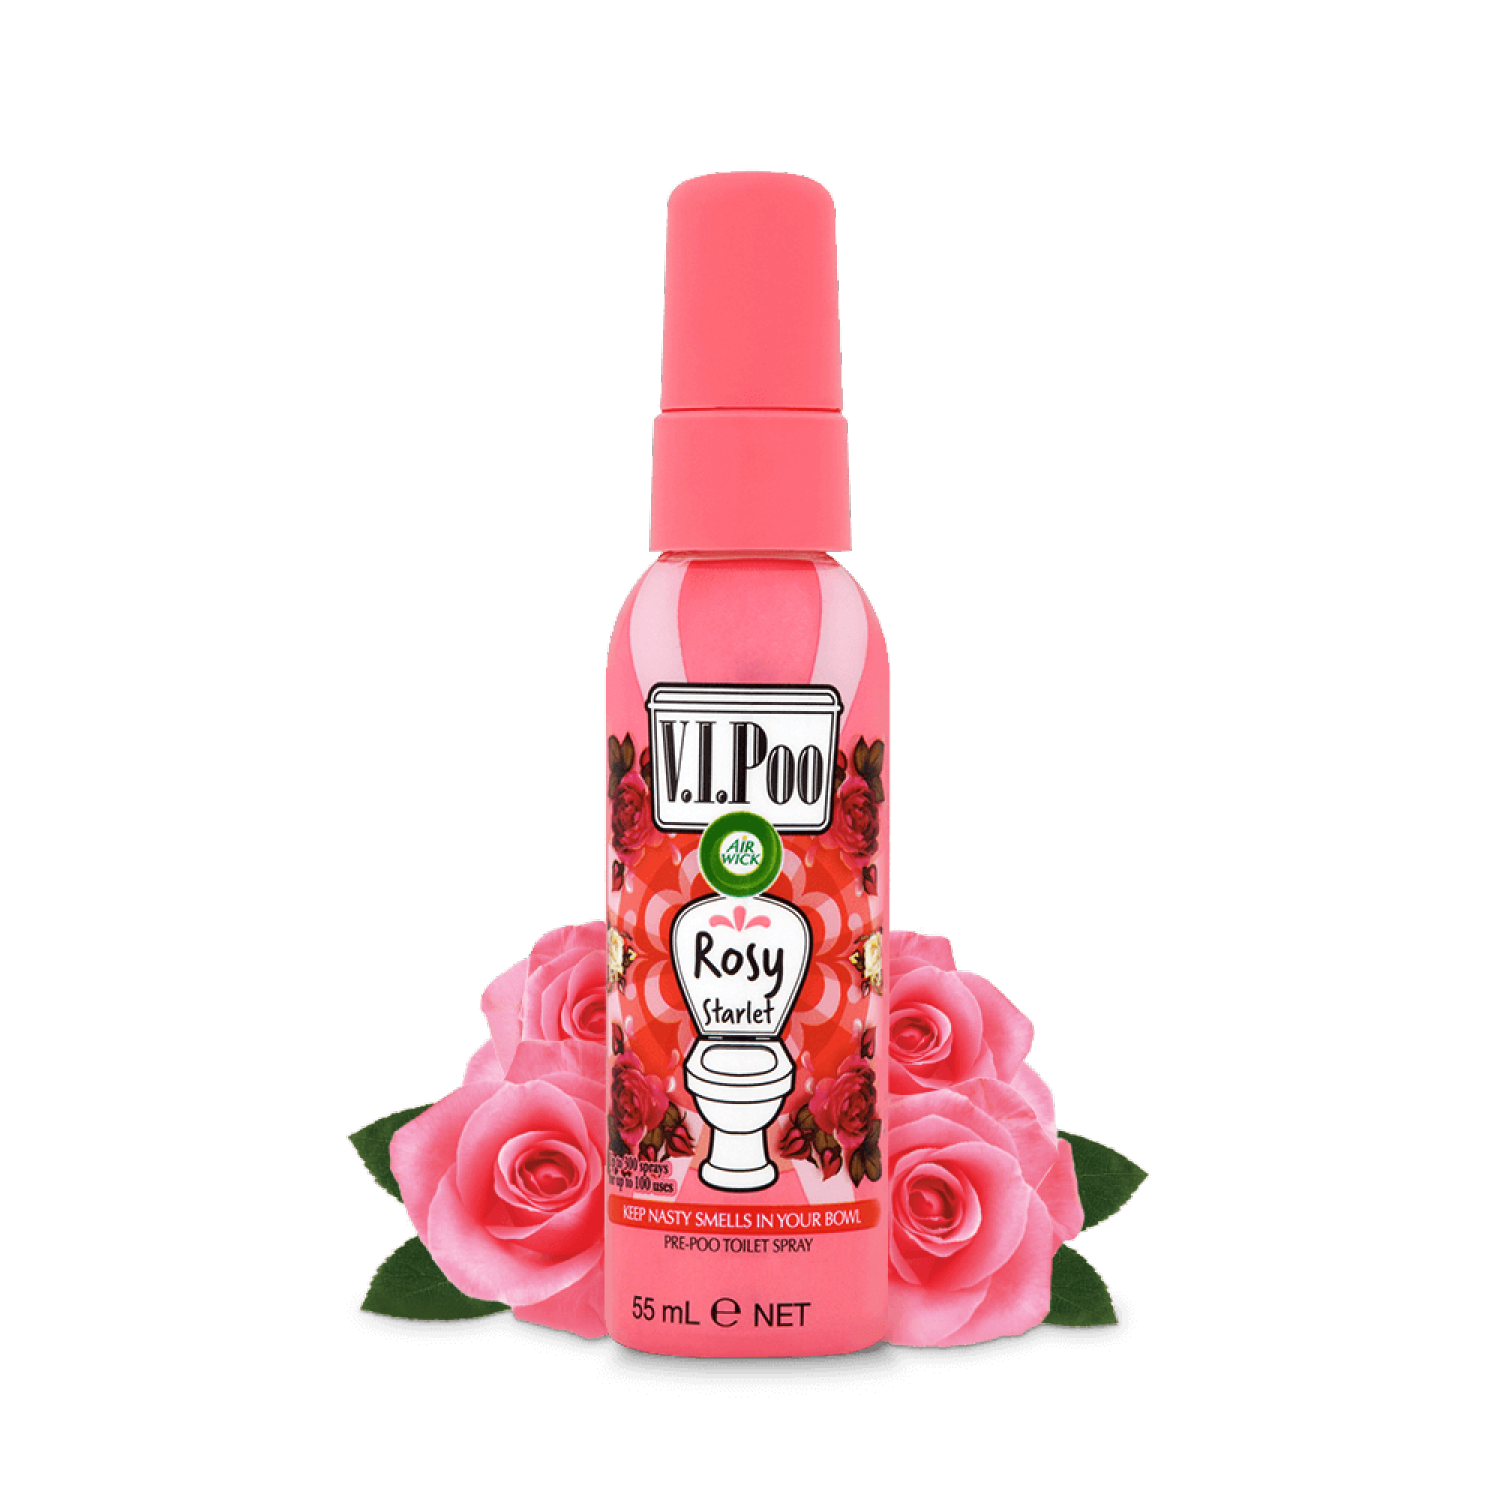 AIR WICK Air Wick vipoo rose spray 55ml pas cher 